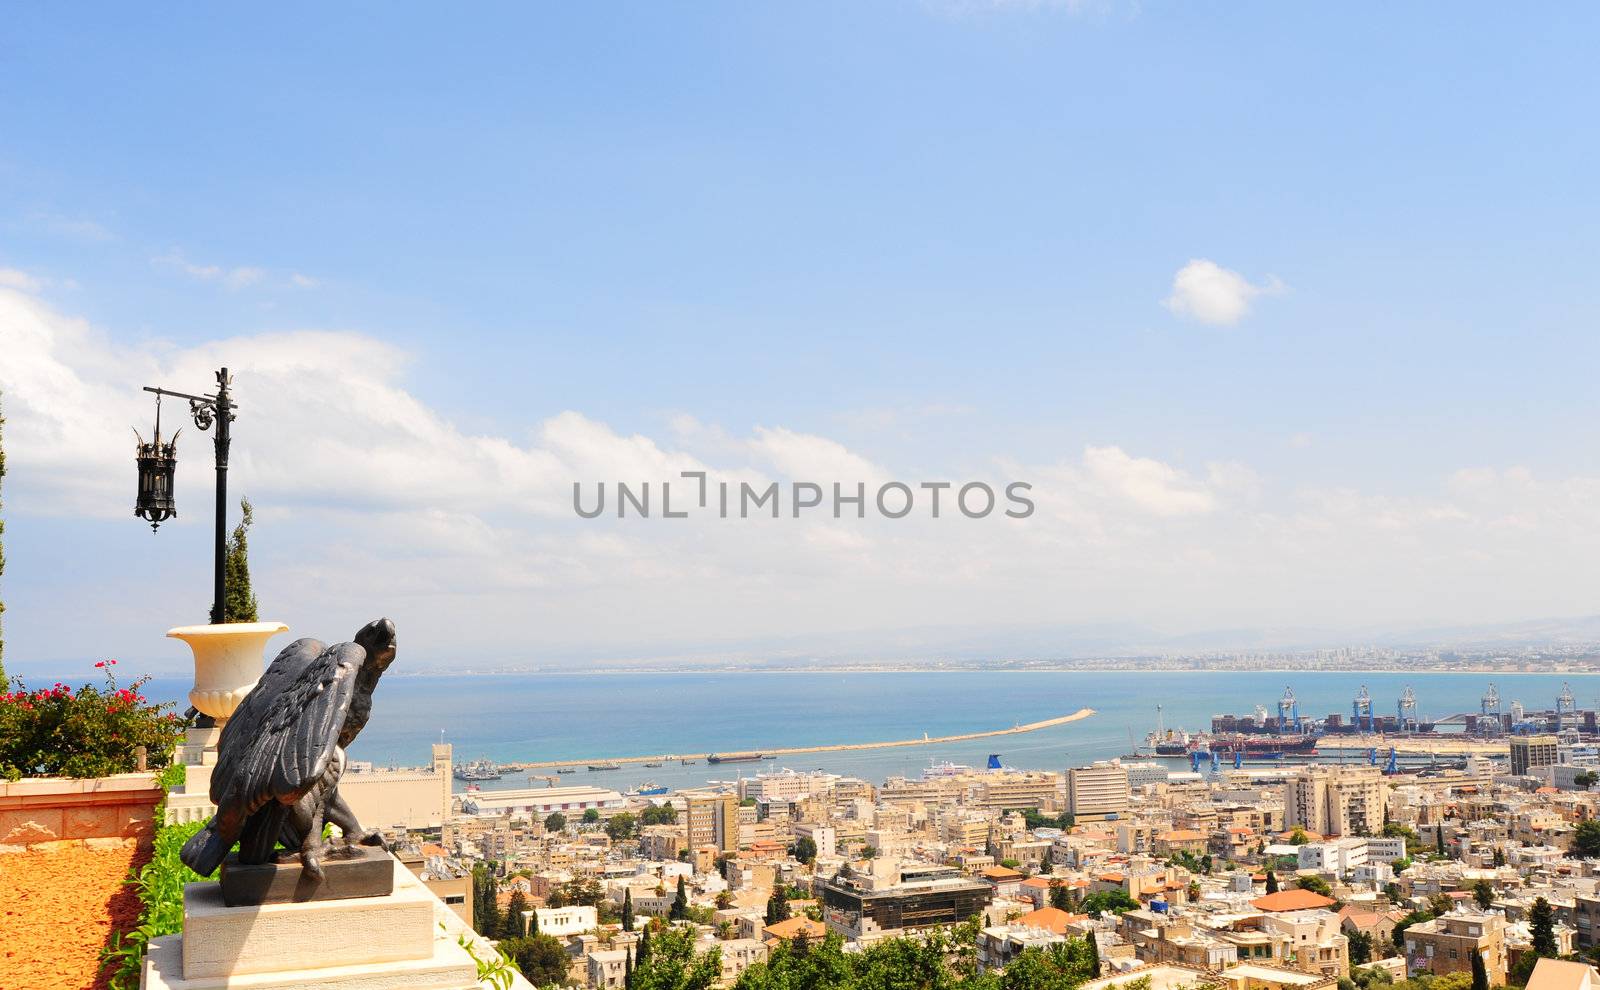  Haifa Port  by gkuna